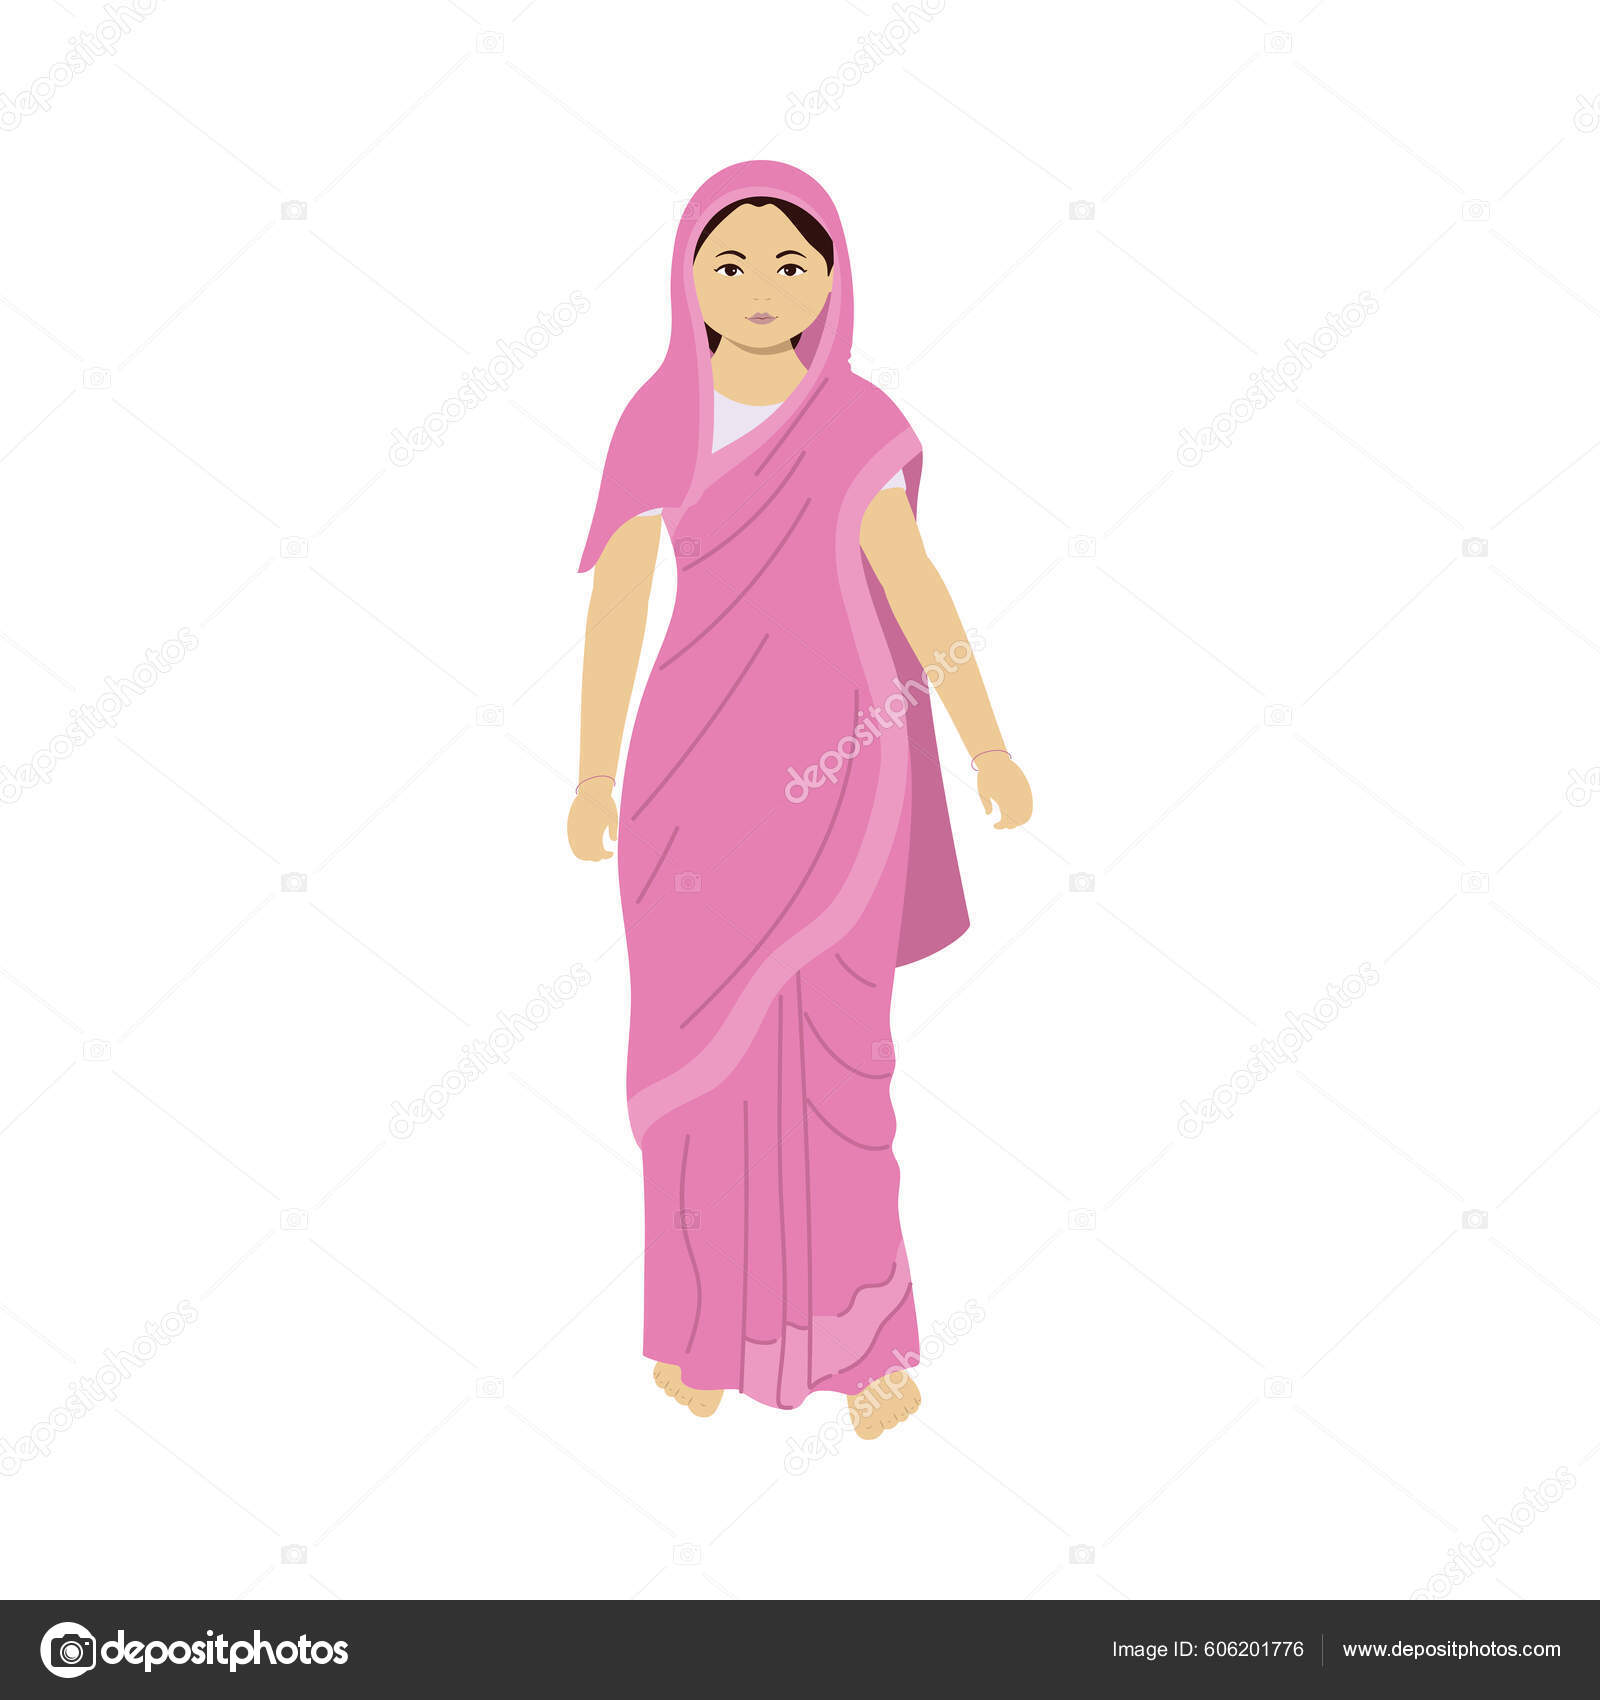 https://st.depositphotos.com/1001941/60620/v/1600/depositphotos_606201776-stock-illustration-character-indian-woman-wearing-pink.jpg